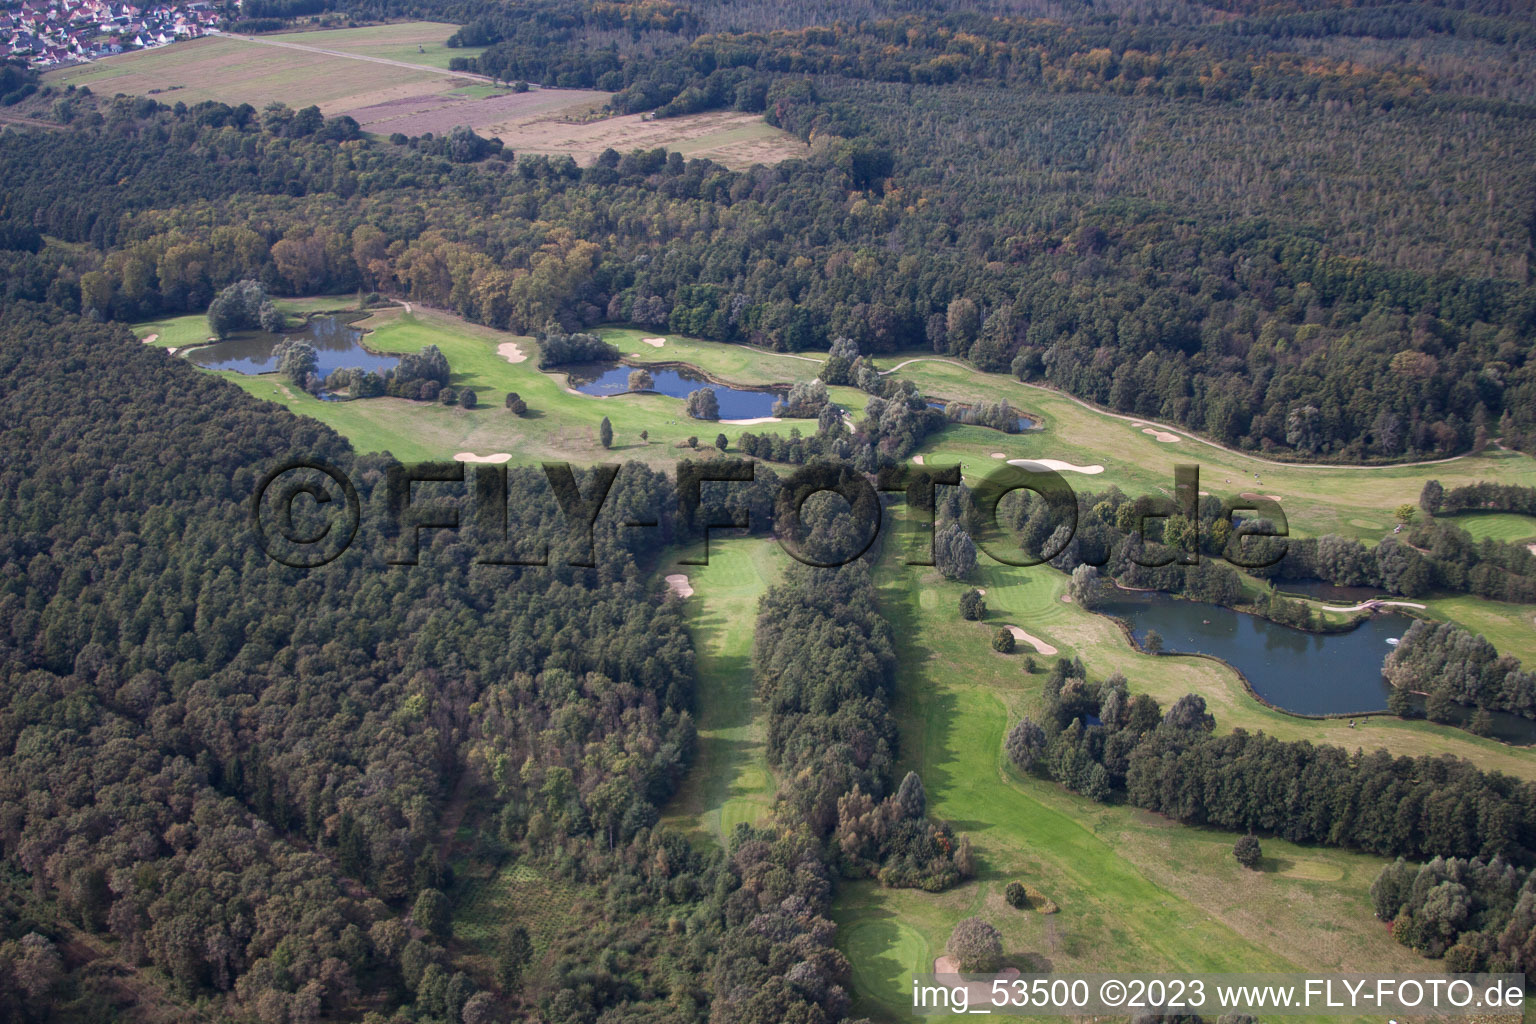 Baden-Baden Golf Club Soufflenheim in Soufflenheim in the state Bas-Rhin, France seen from a drone